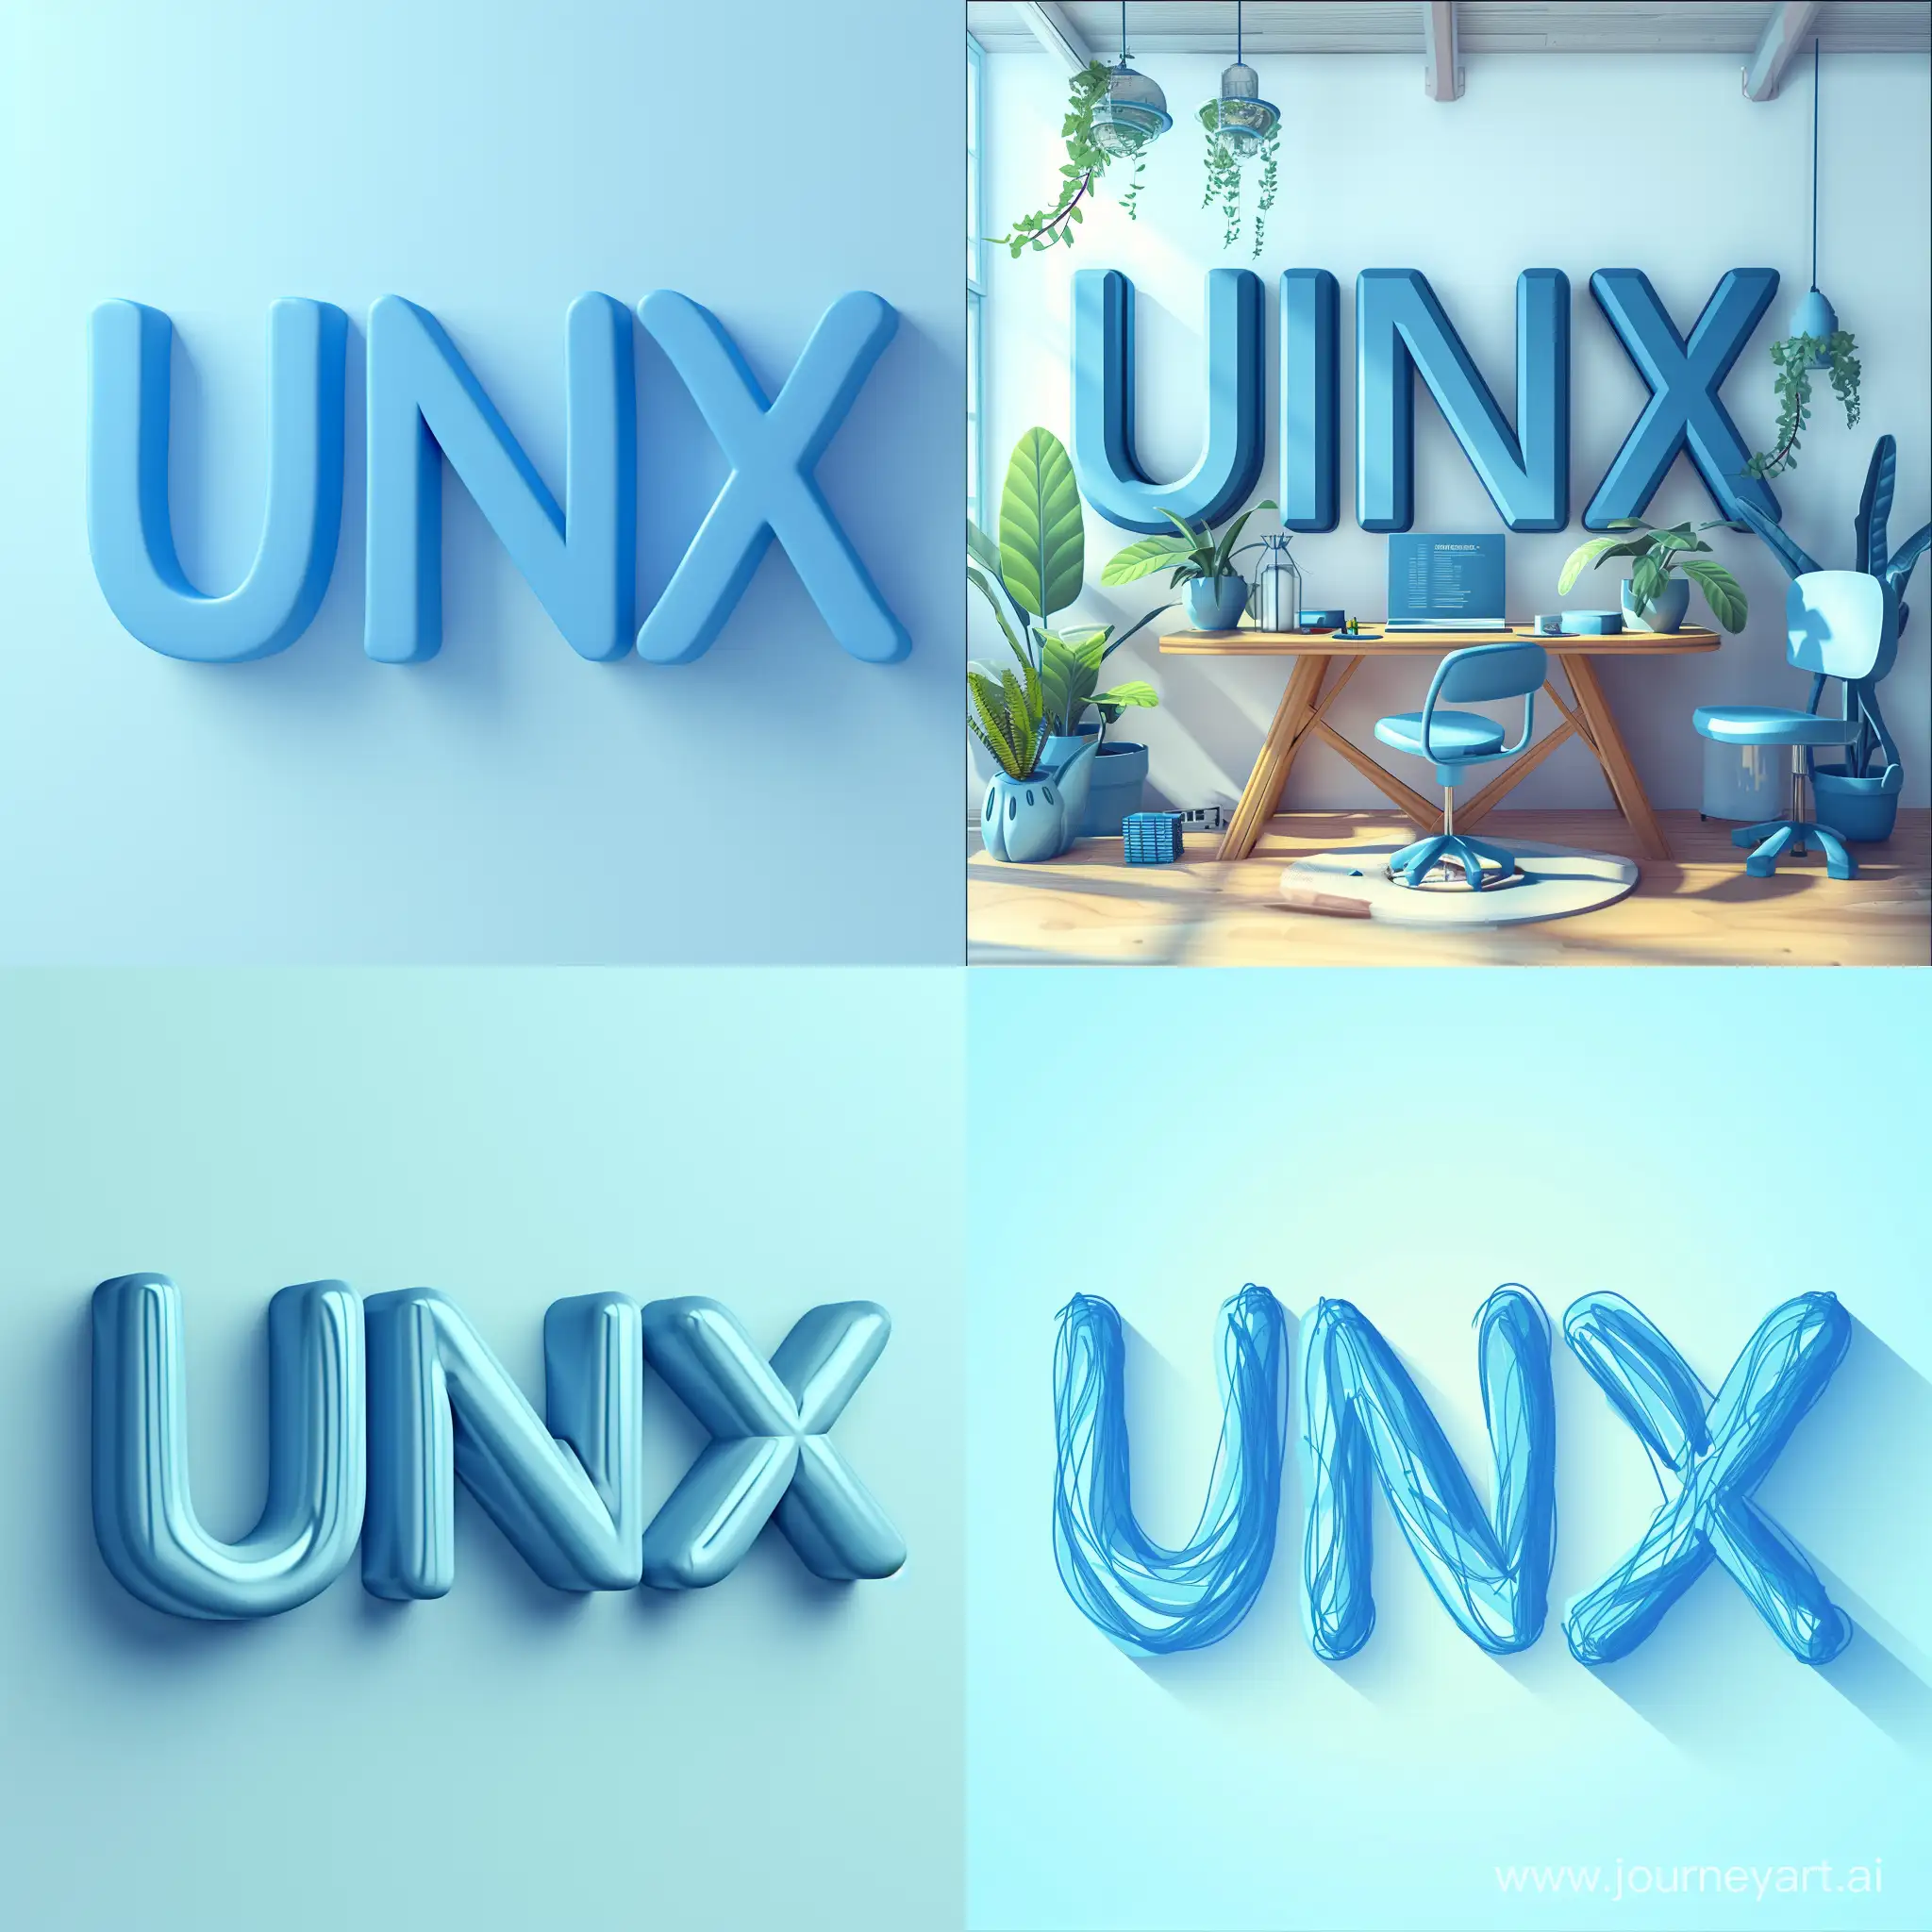 Elegant-UNIX-Inspired-Minimalist-Banner-in-Warm-Blue-Tones